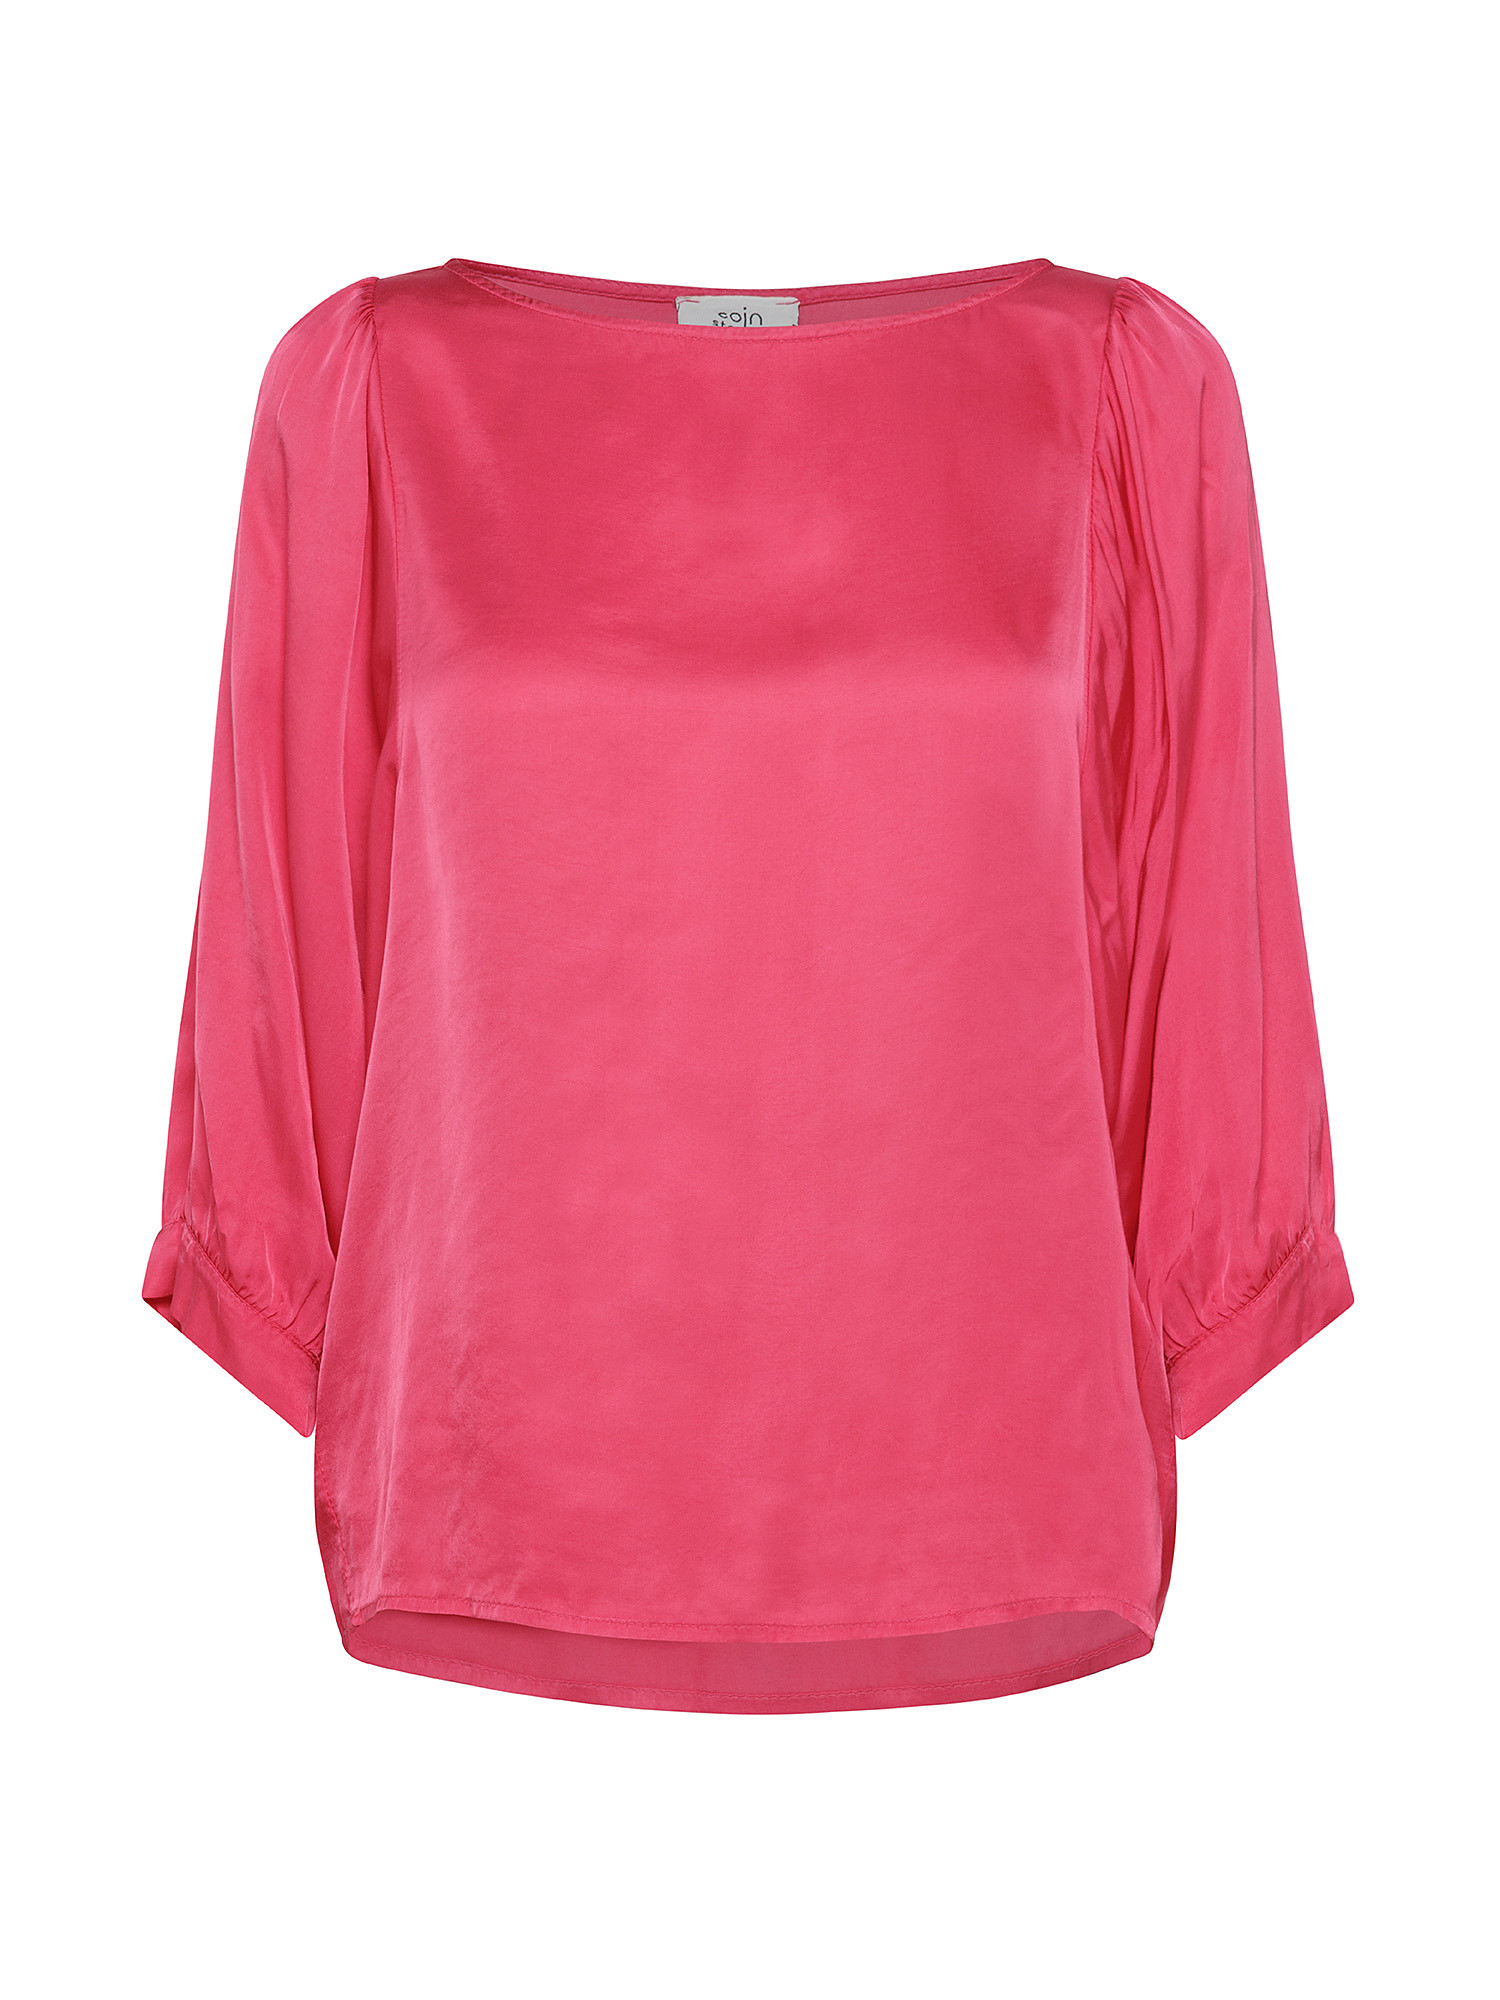 Viscose blouse, Pink Fuchsia, large image number 0